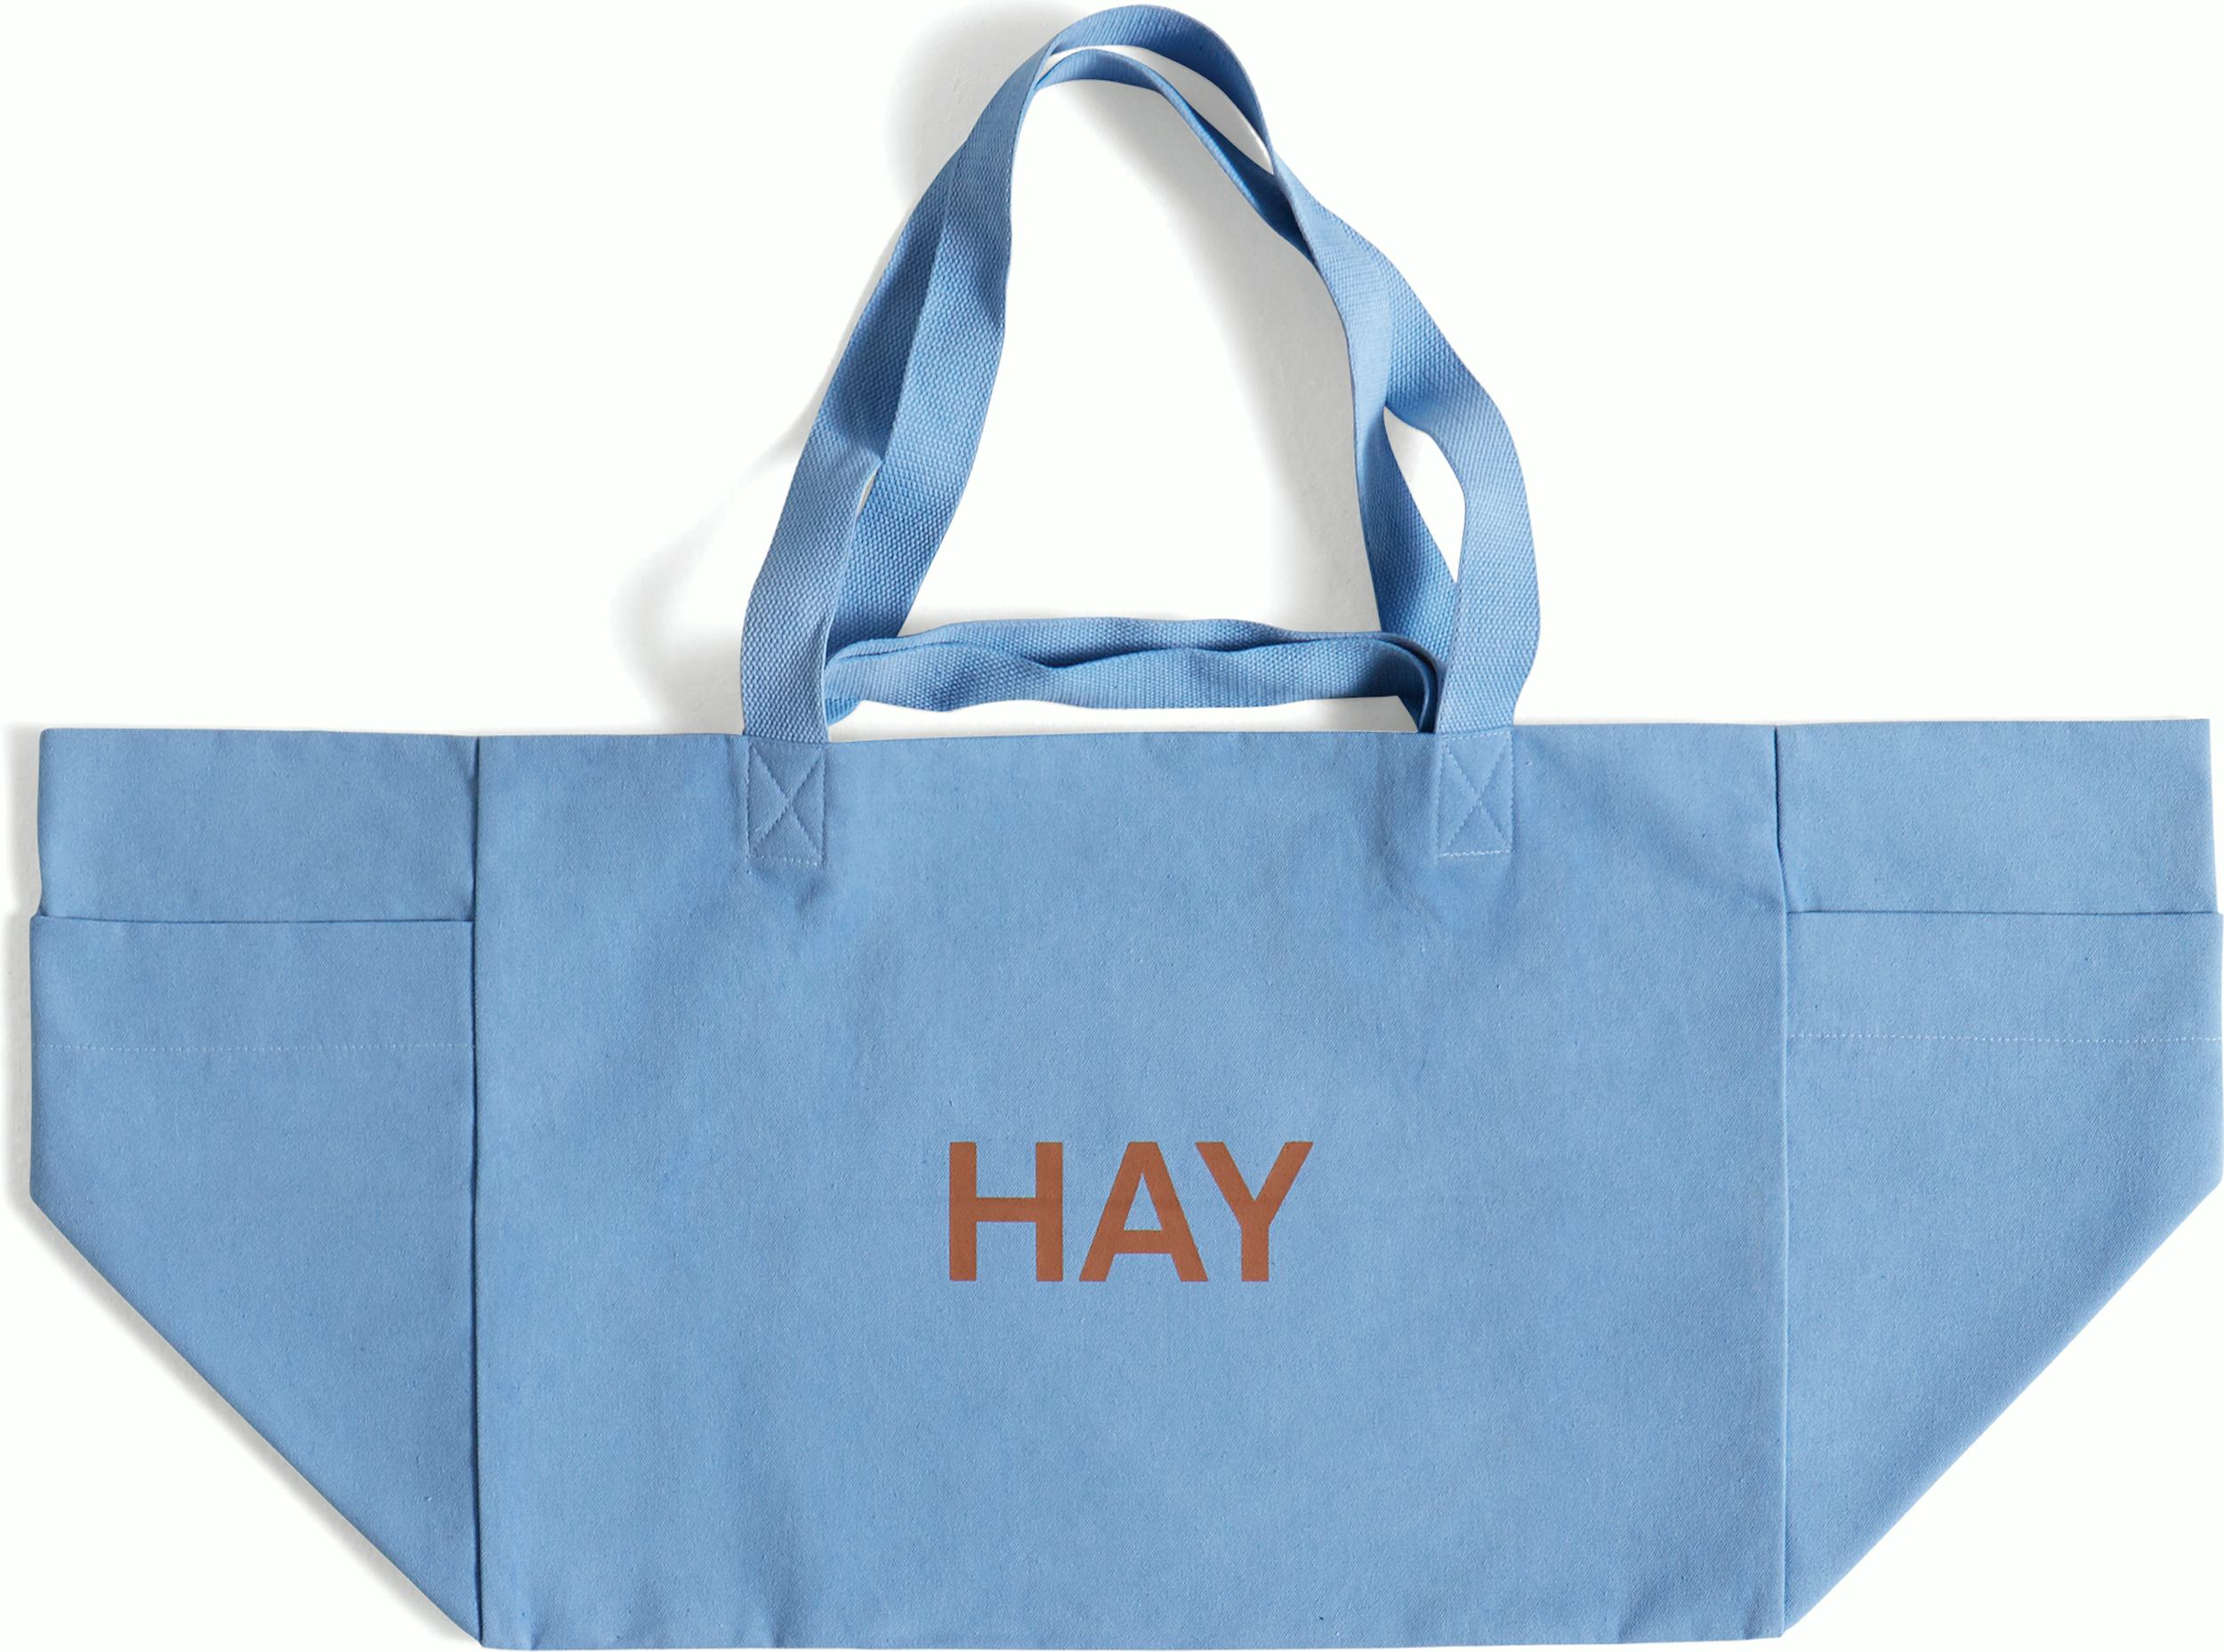 Should You Buy a New or Preowned Hermès Handbag?